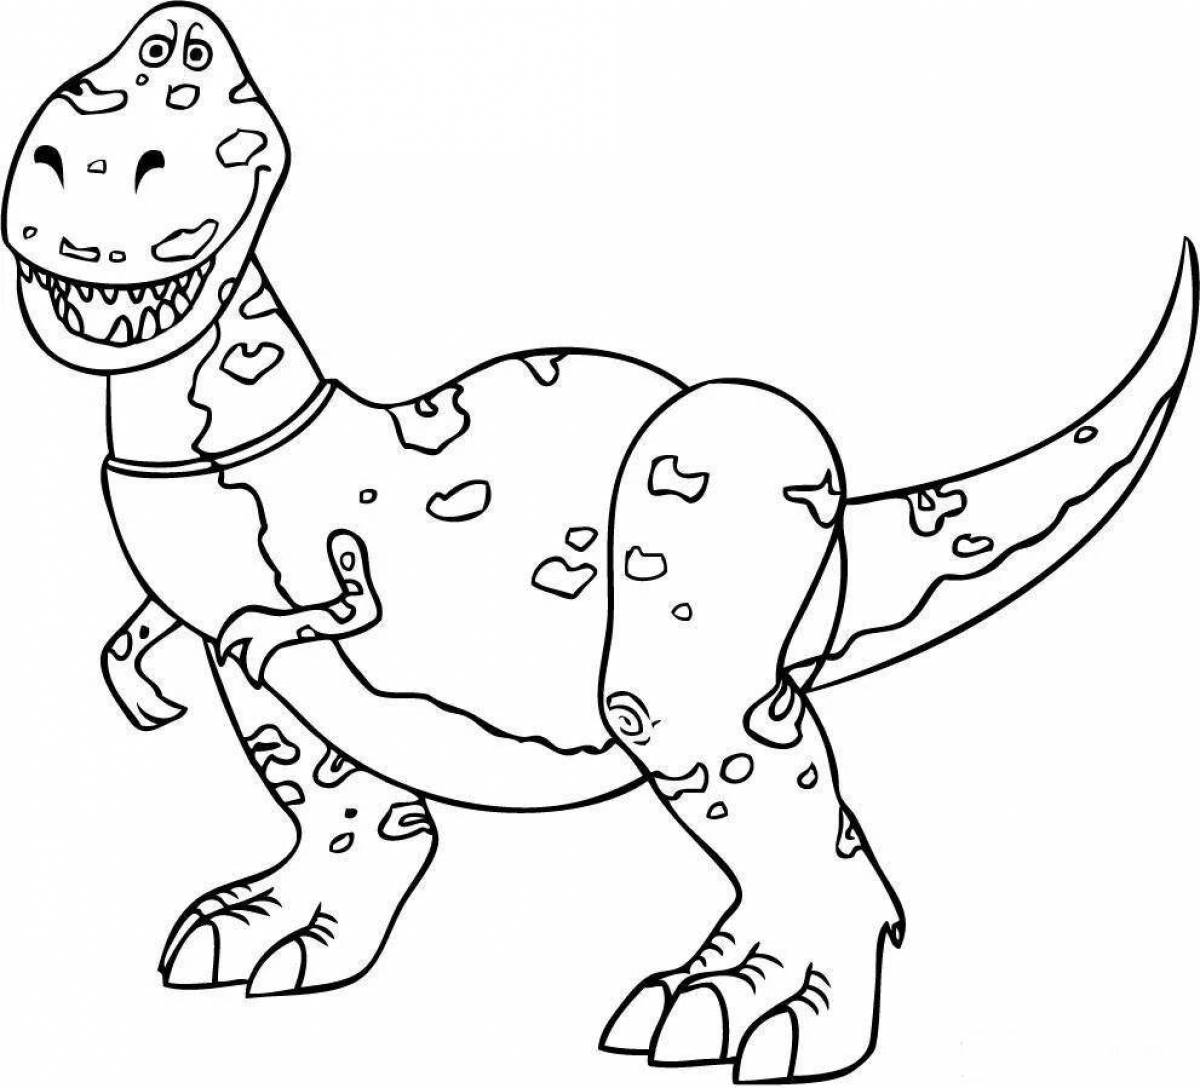 Раскраска юмористический тарбозавр буль